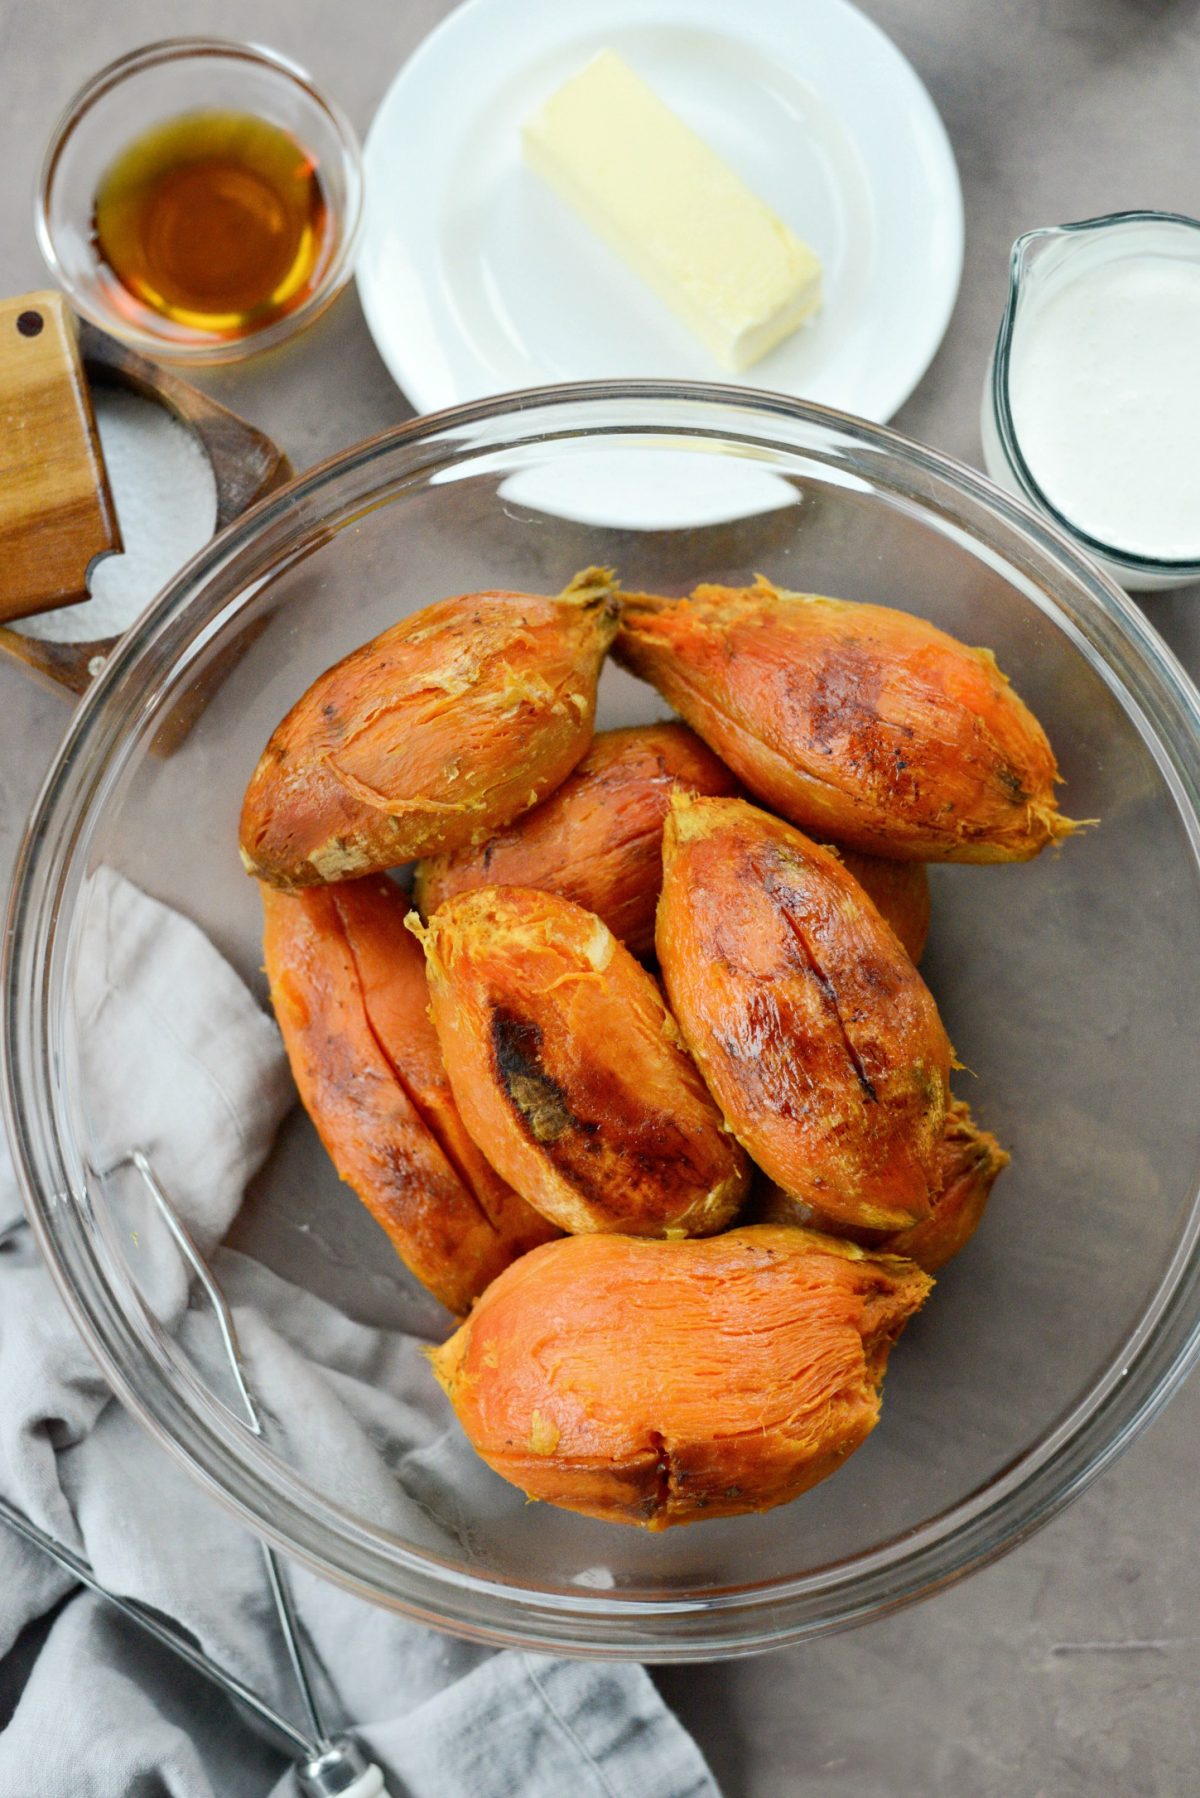 Add sweet potato flesh to bowl.